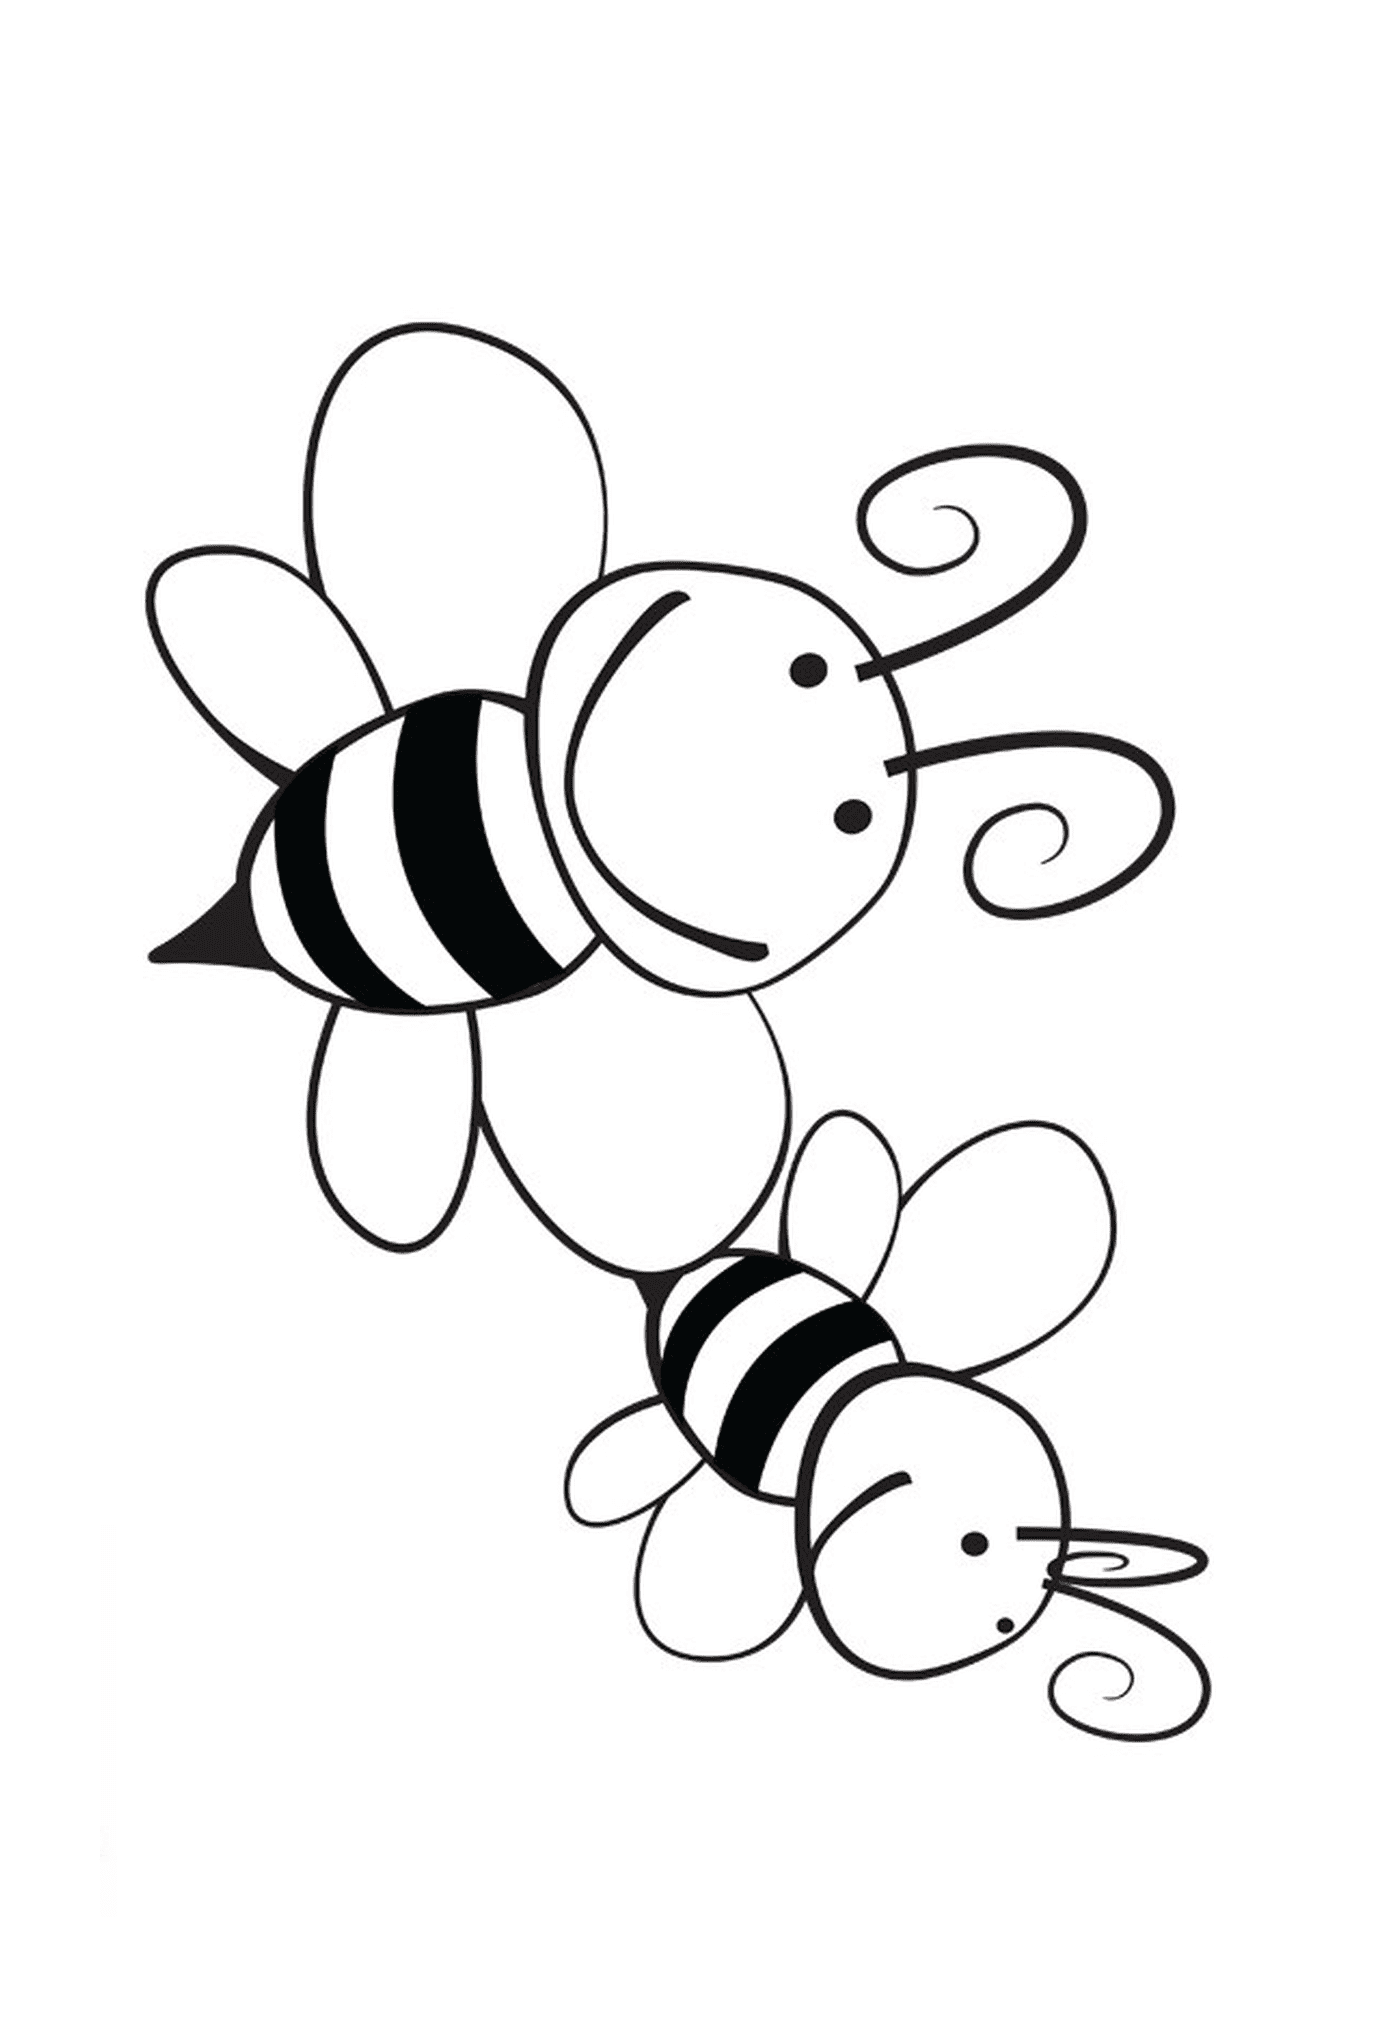  Duas abelhas sorridentes juntas 